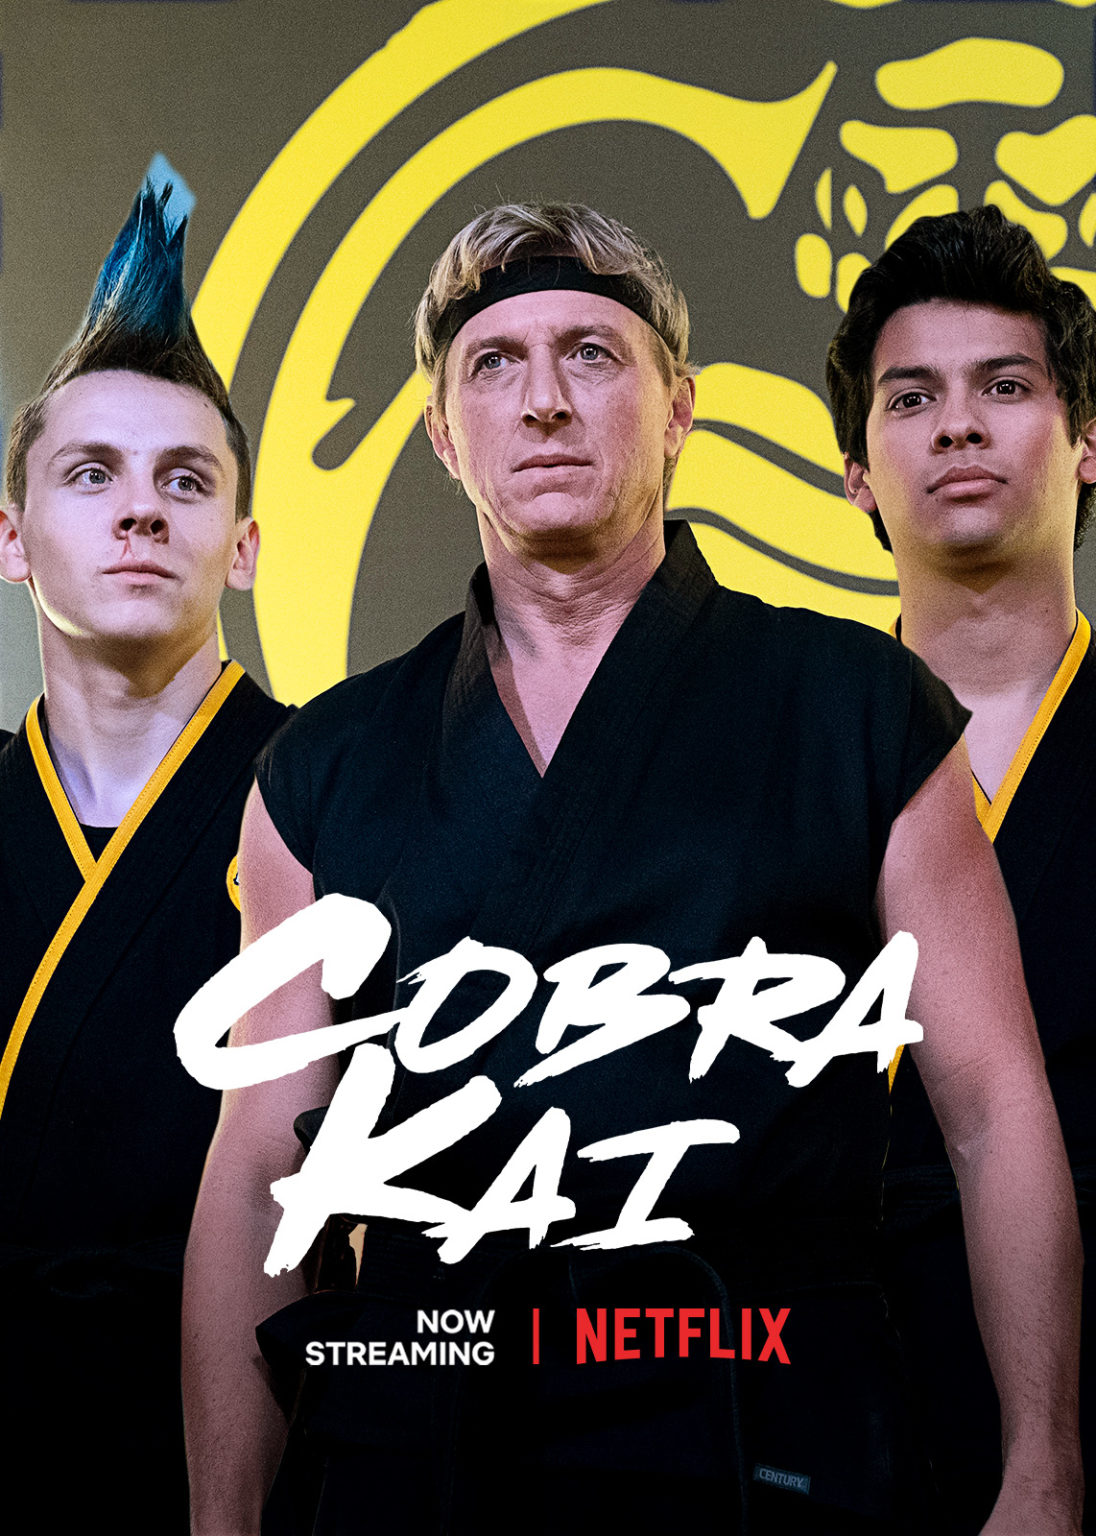 Cobra Kai Season 3 Release Date, Cast and More! DroidJournal